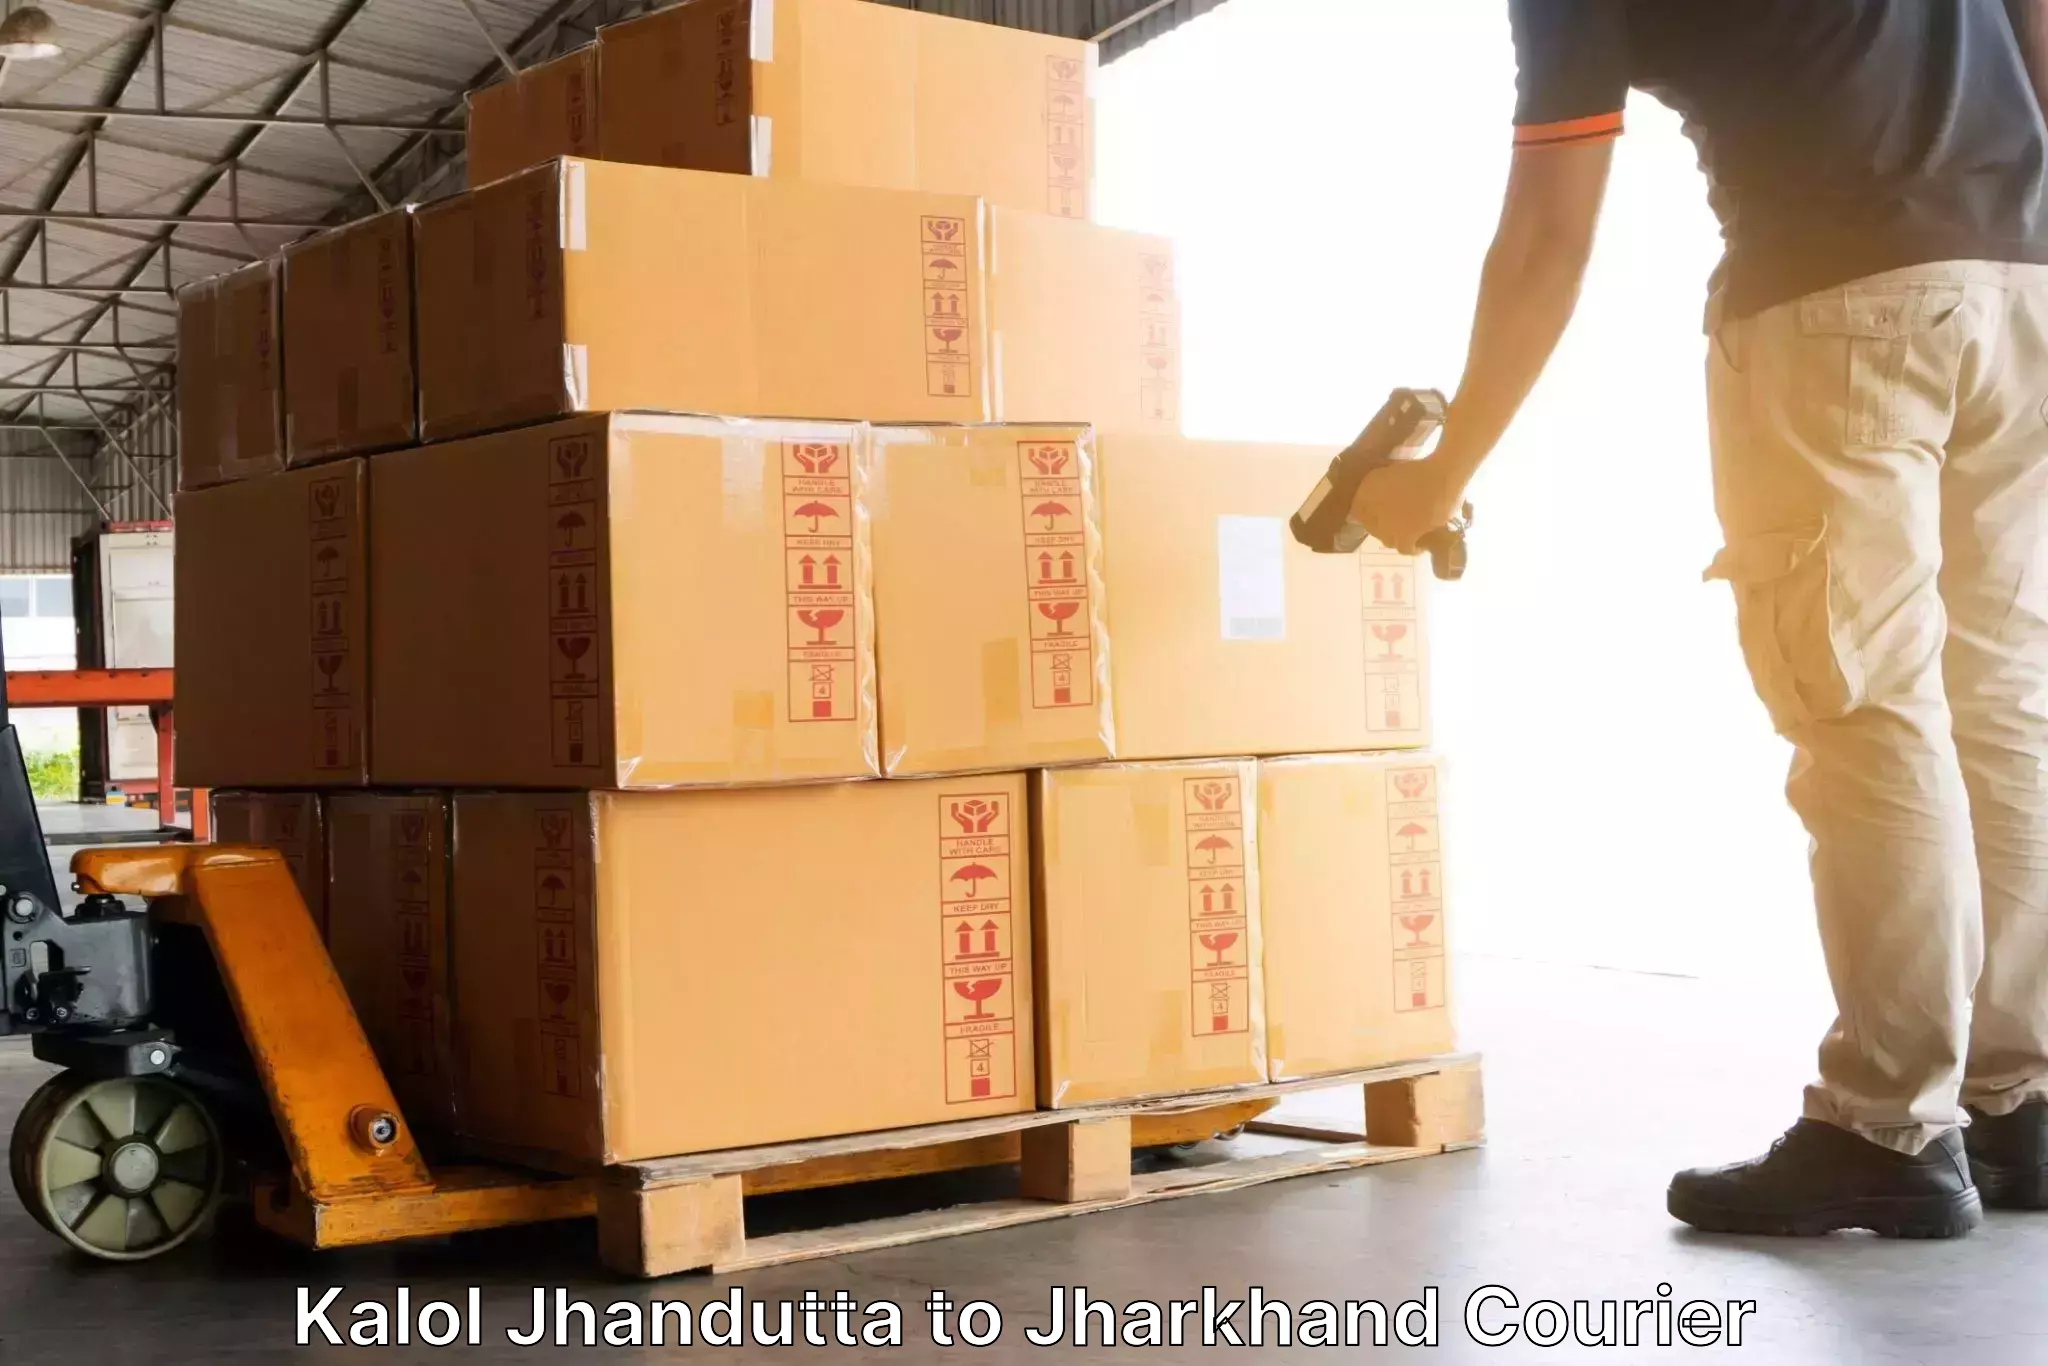 Professional courier services Kalol Jhandutta to Chaibasa